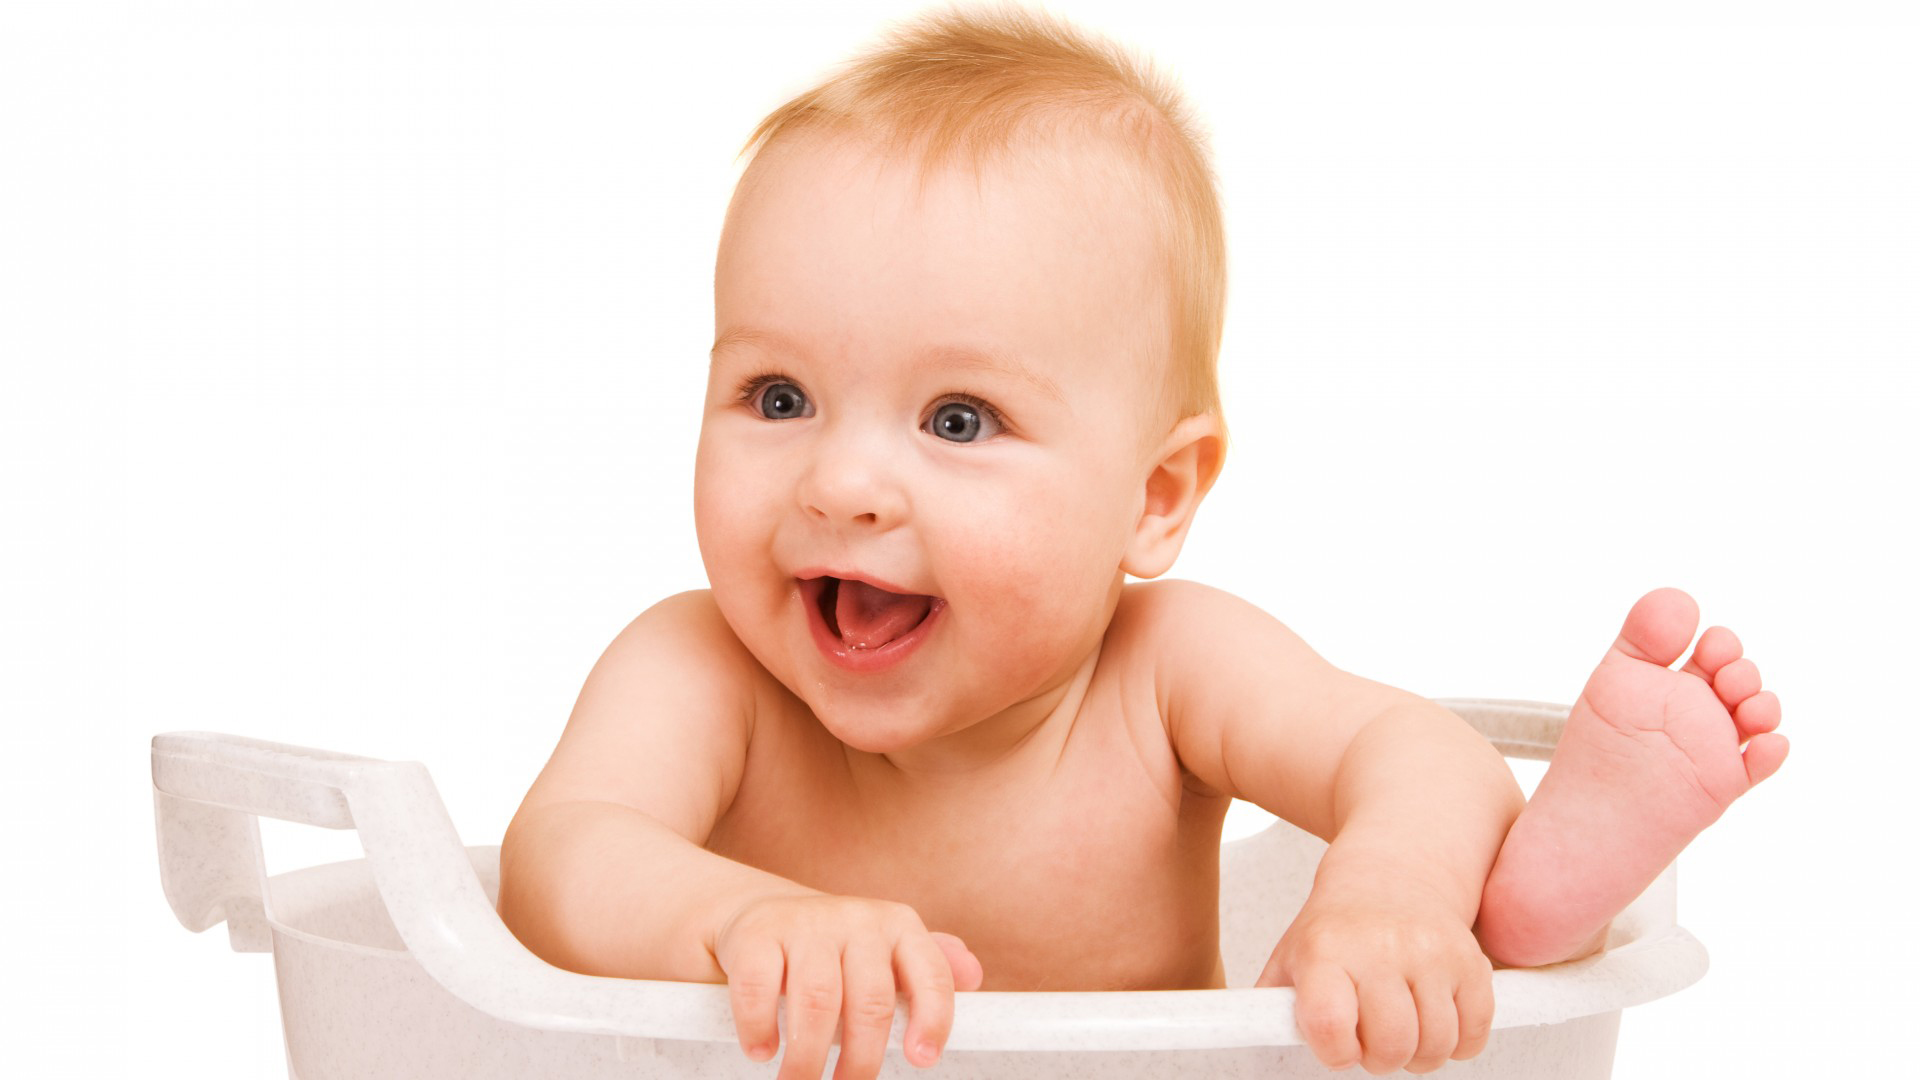 Innocent Smile of Baby Boy Wallpaper | Rocks wallpaper hd